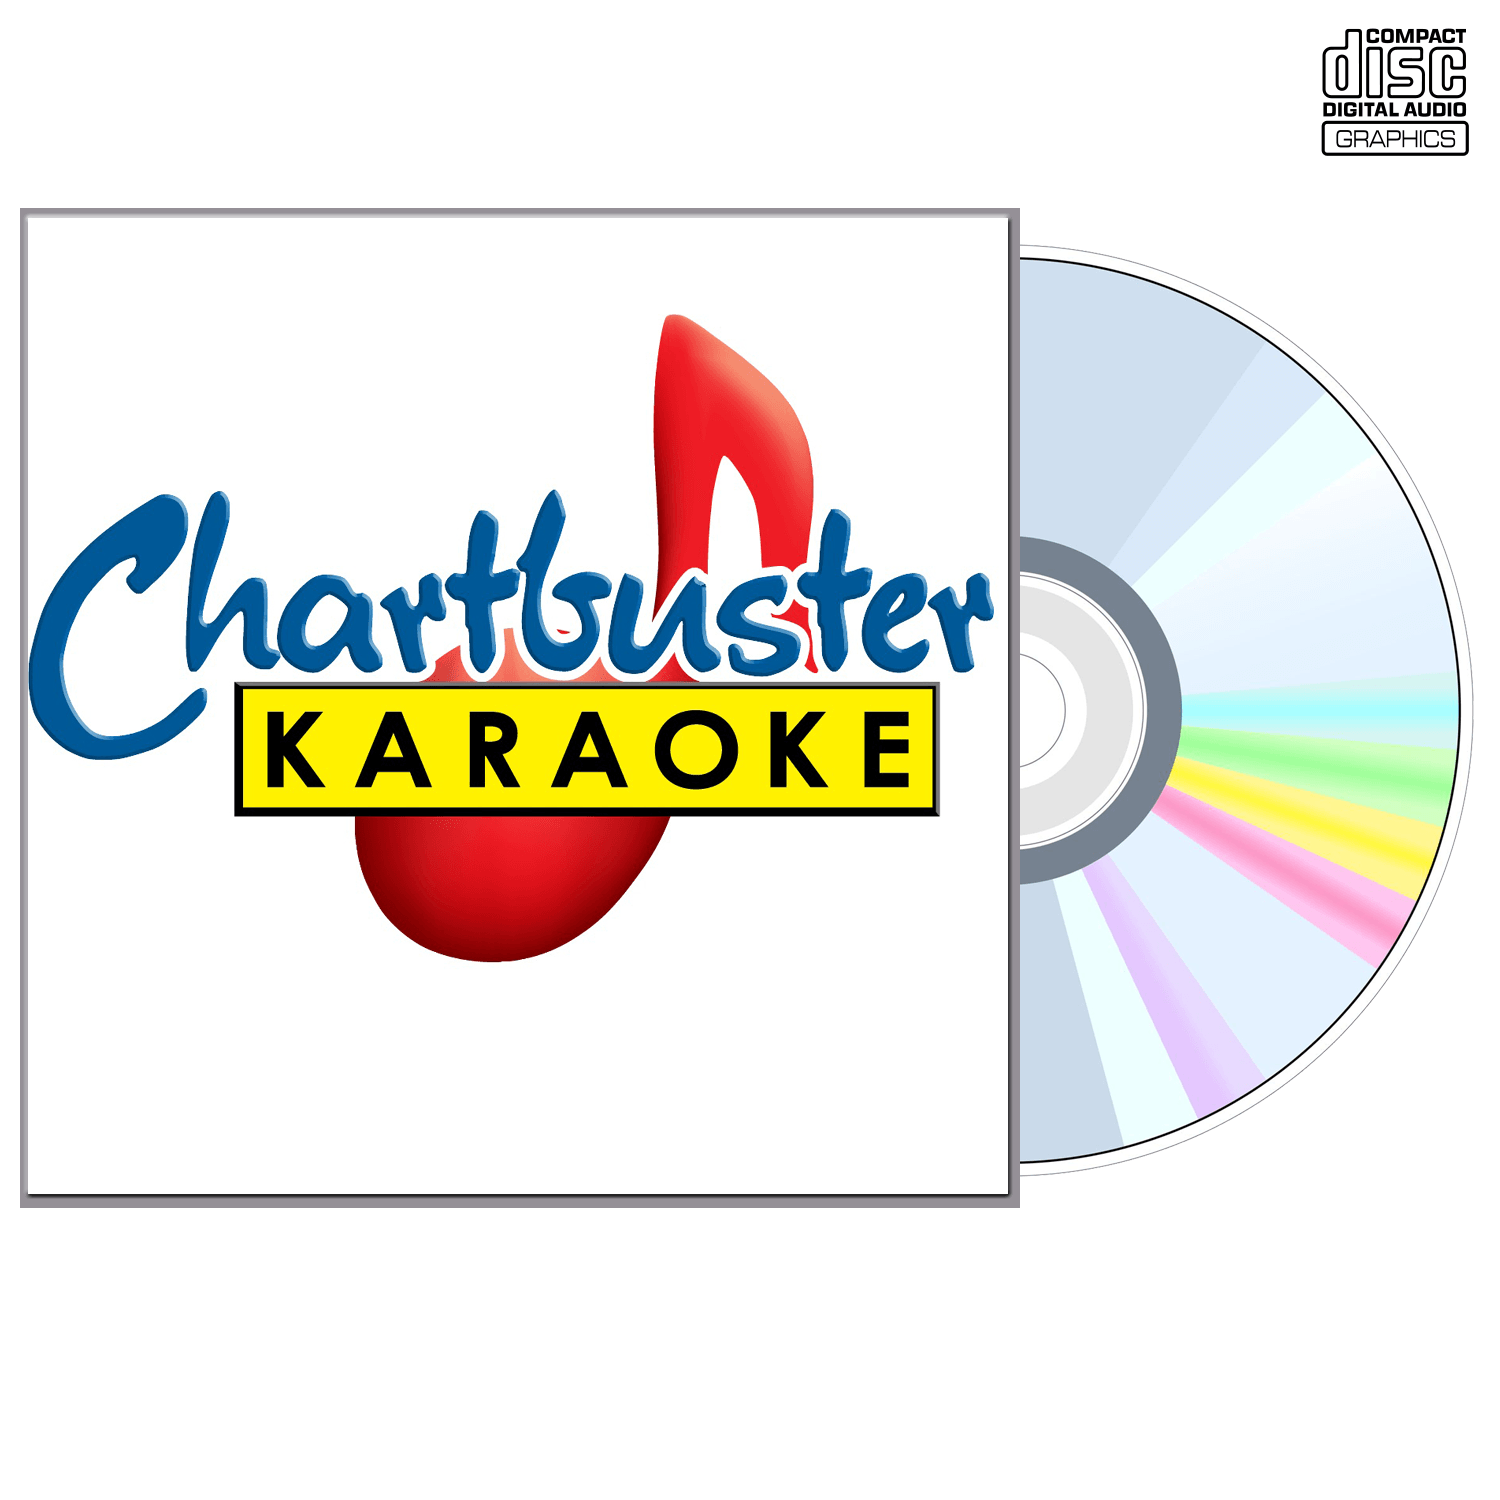 Neil Diamond - CD+G - Chartbuster Karaoke - Karaoke Home Entertainment